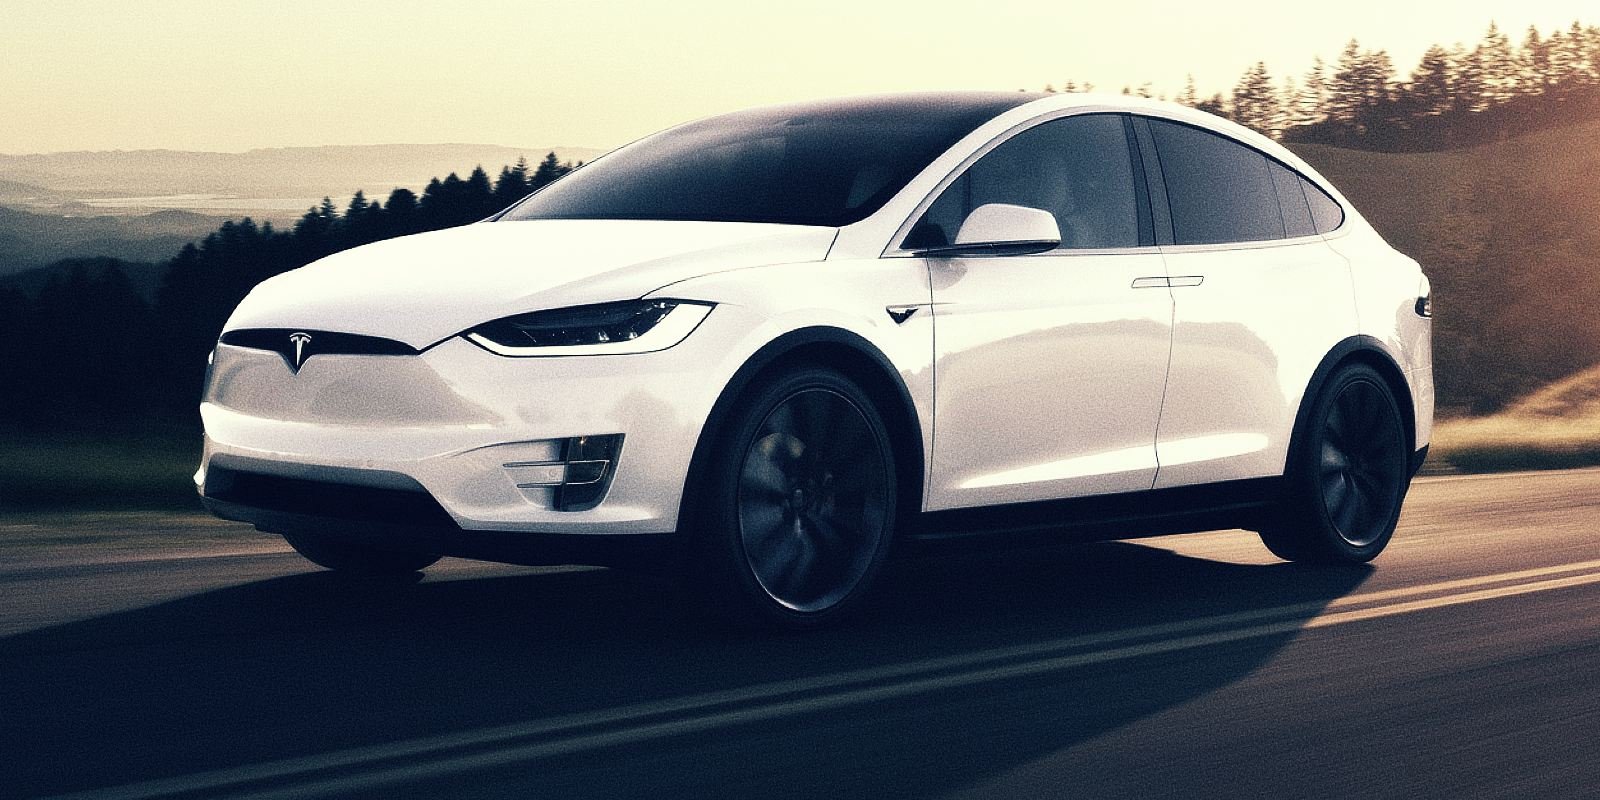 Key fob ของ Tesla Model X อาจถูกแฮ็กเพื่อขโมยรถยนต์ได้